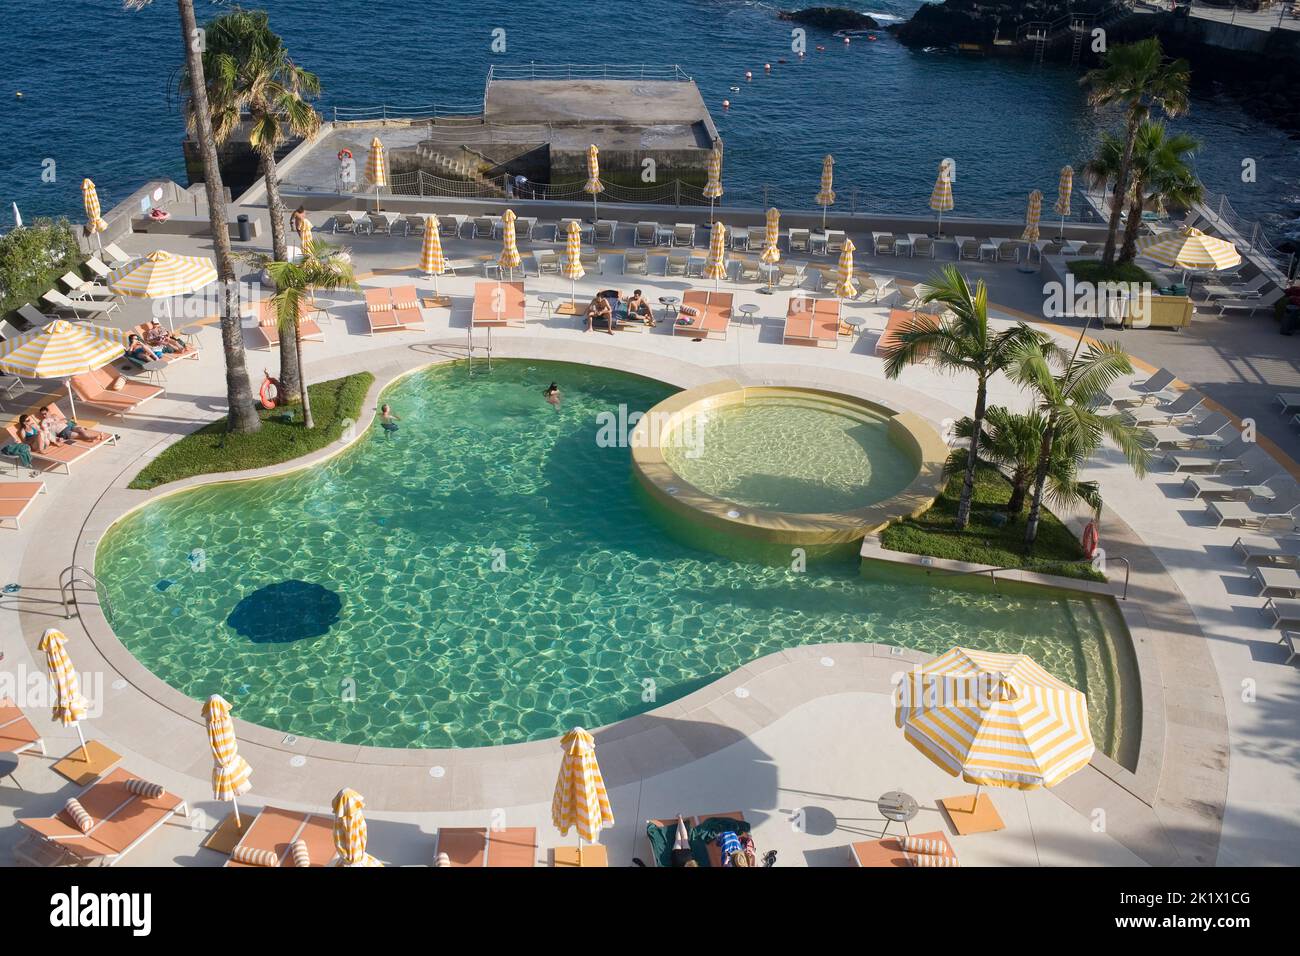 Kleiner Pool am Meer im Hotel Penha de Franca Mar in Funchal Madeira Stockfoto